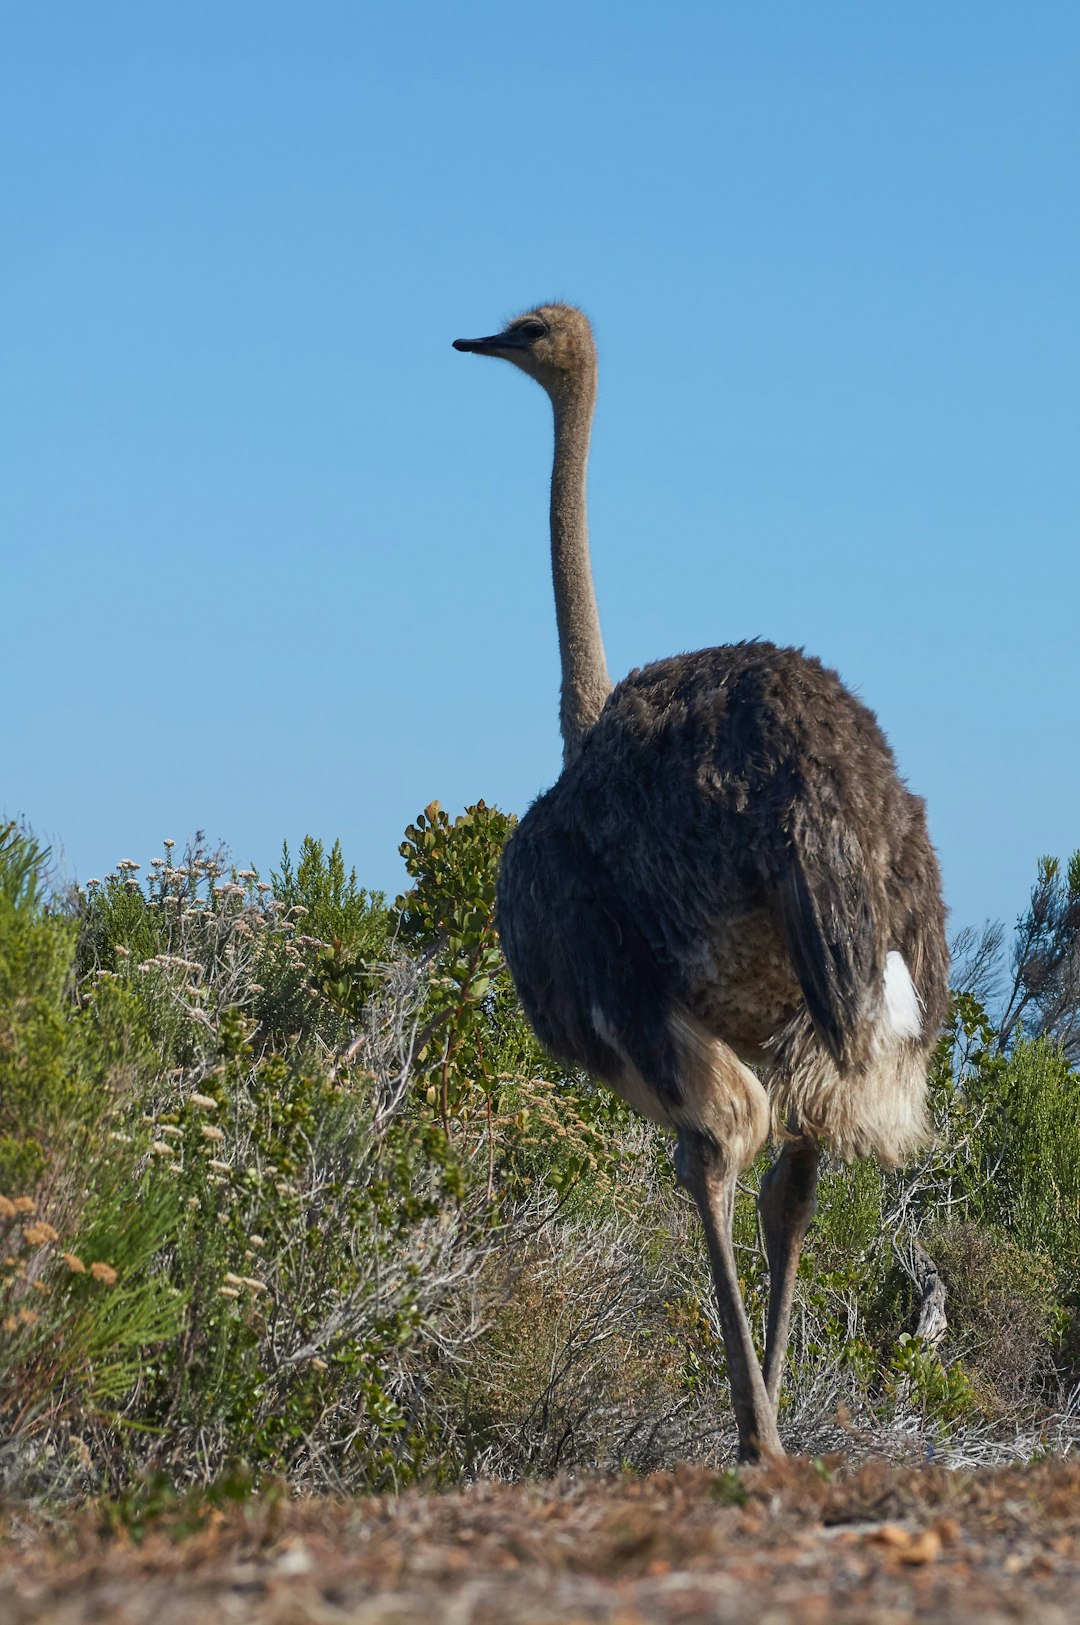 ostrich on green grass field during daytime